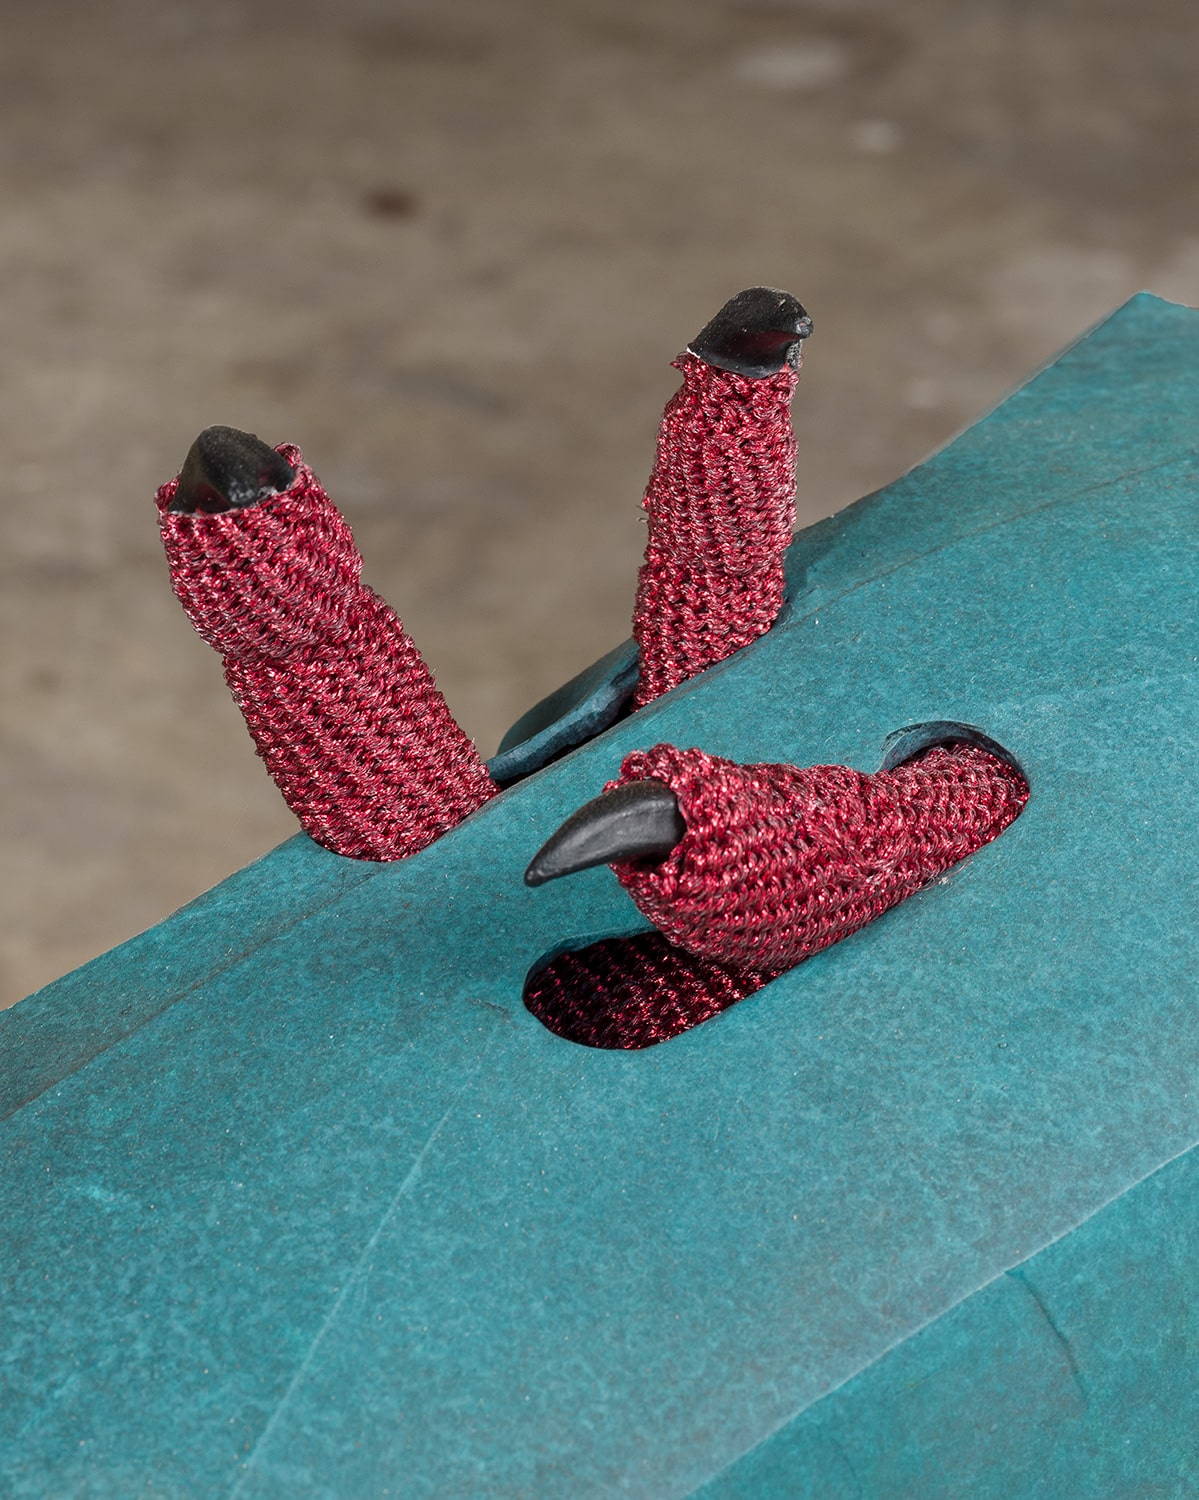 Red crocheted claws poke through a blue box.